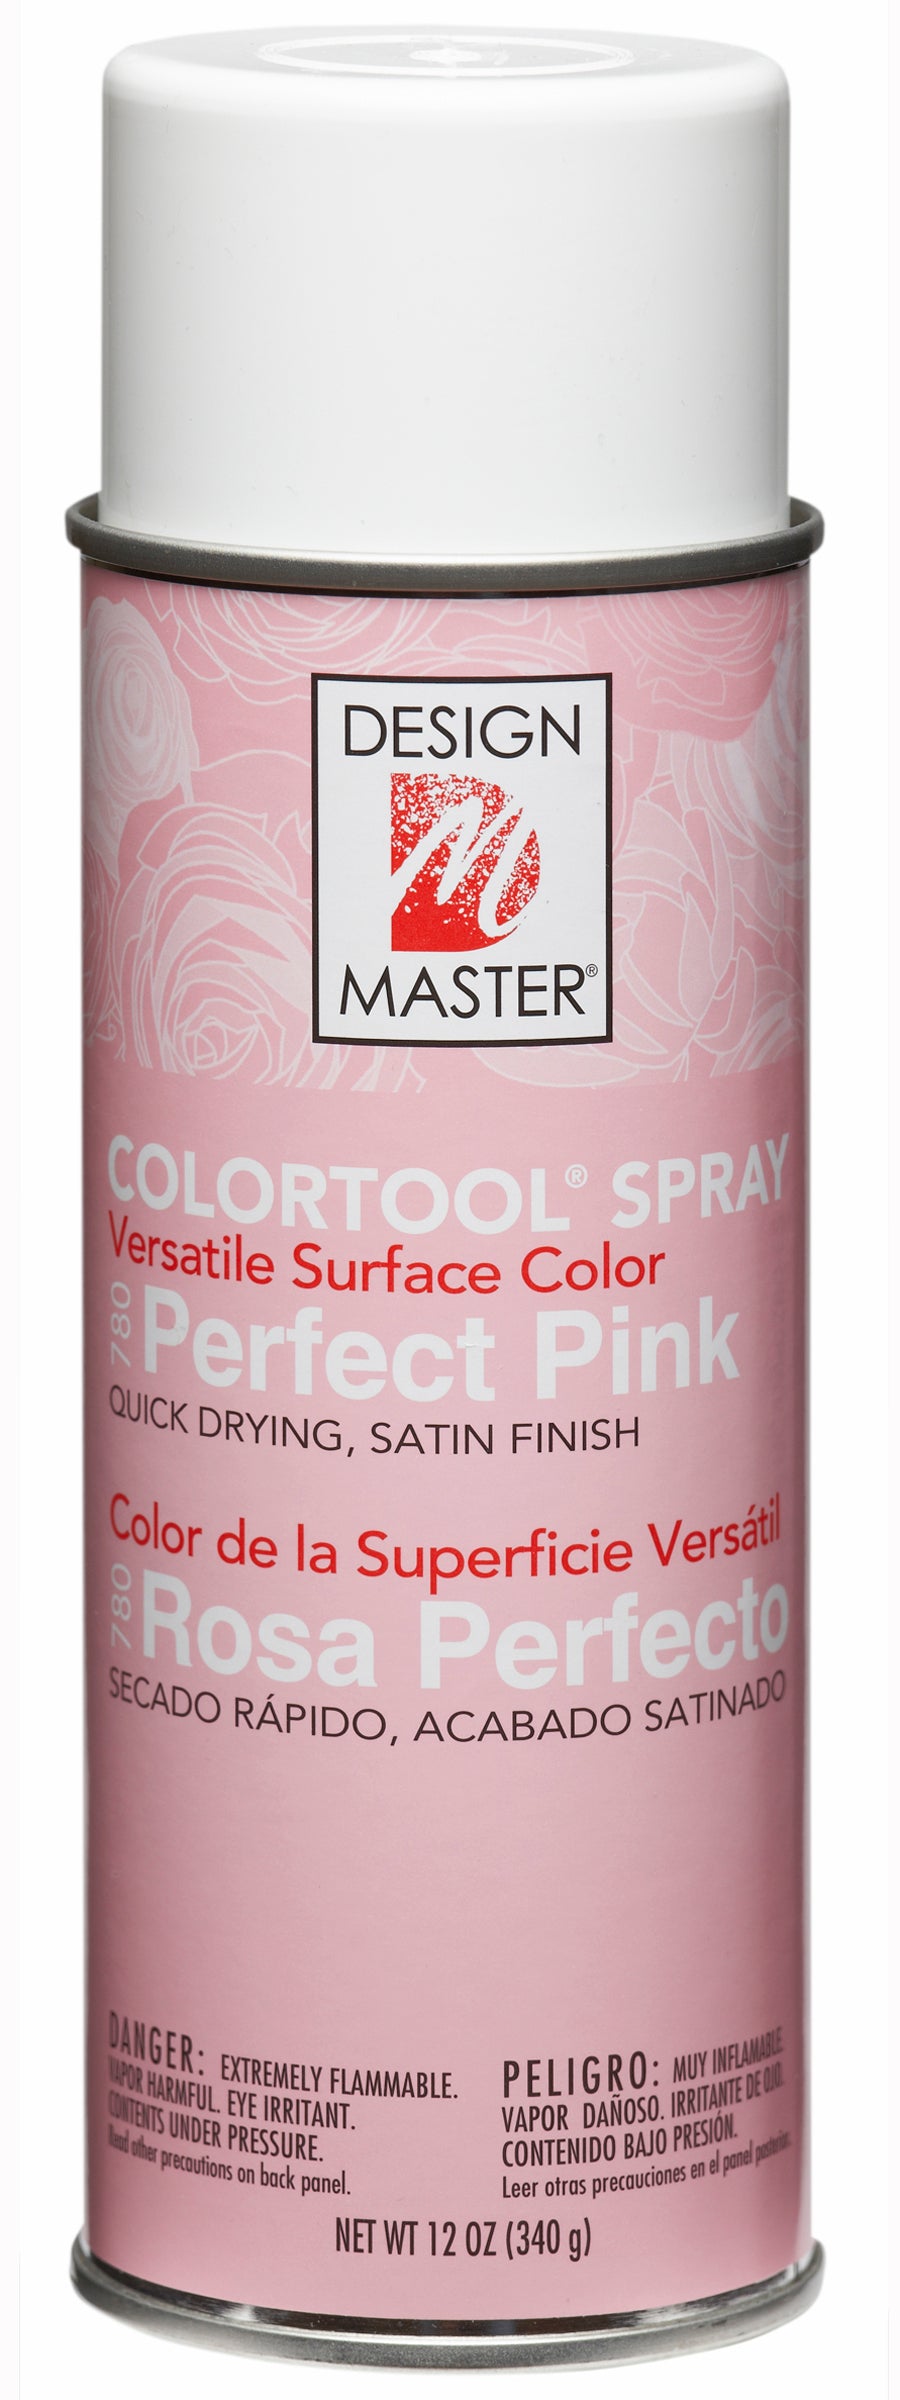 Design Master Colortool Spray-Perfect Pink